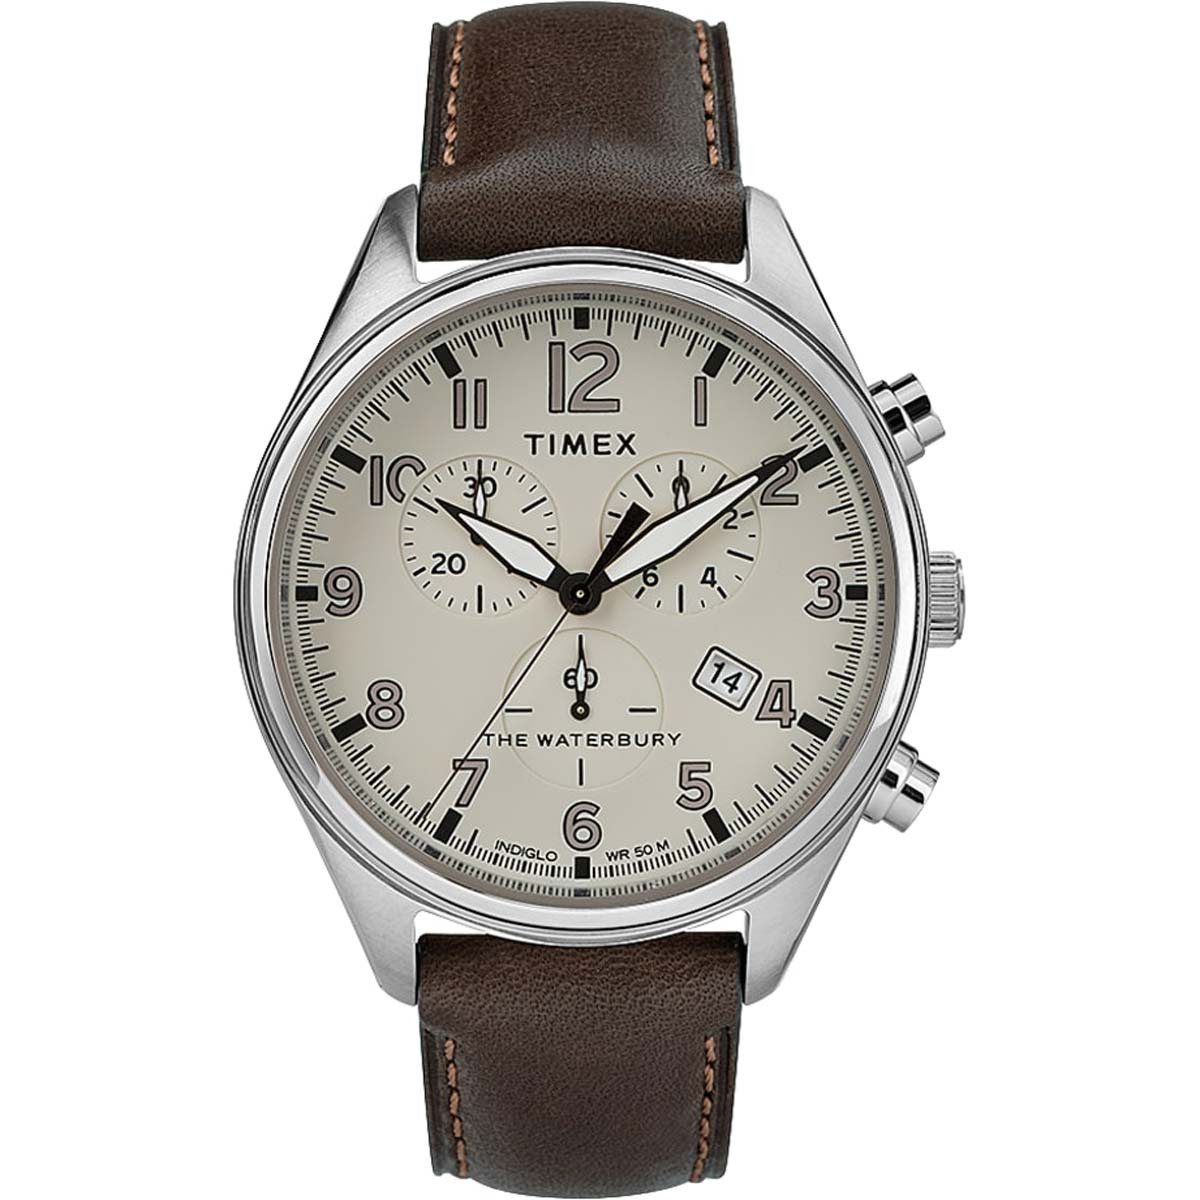 Timex TW2R88200 Men's Waterbury Cream Dial Chronograph Watch $45.99 + Free Shipping